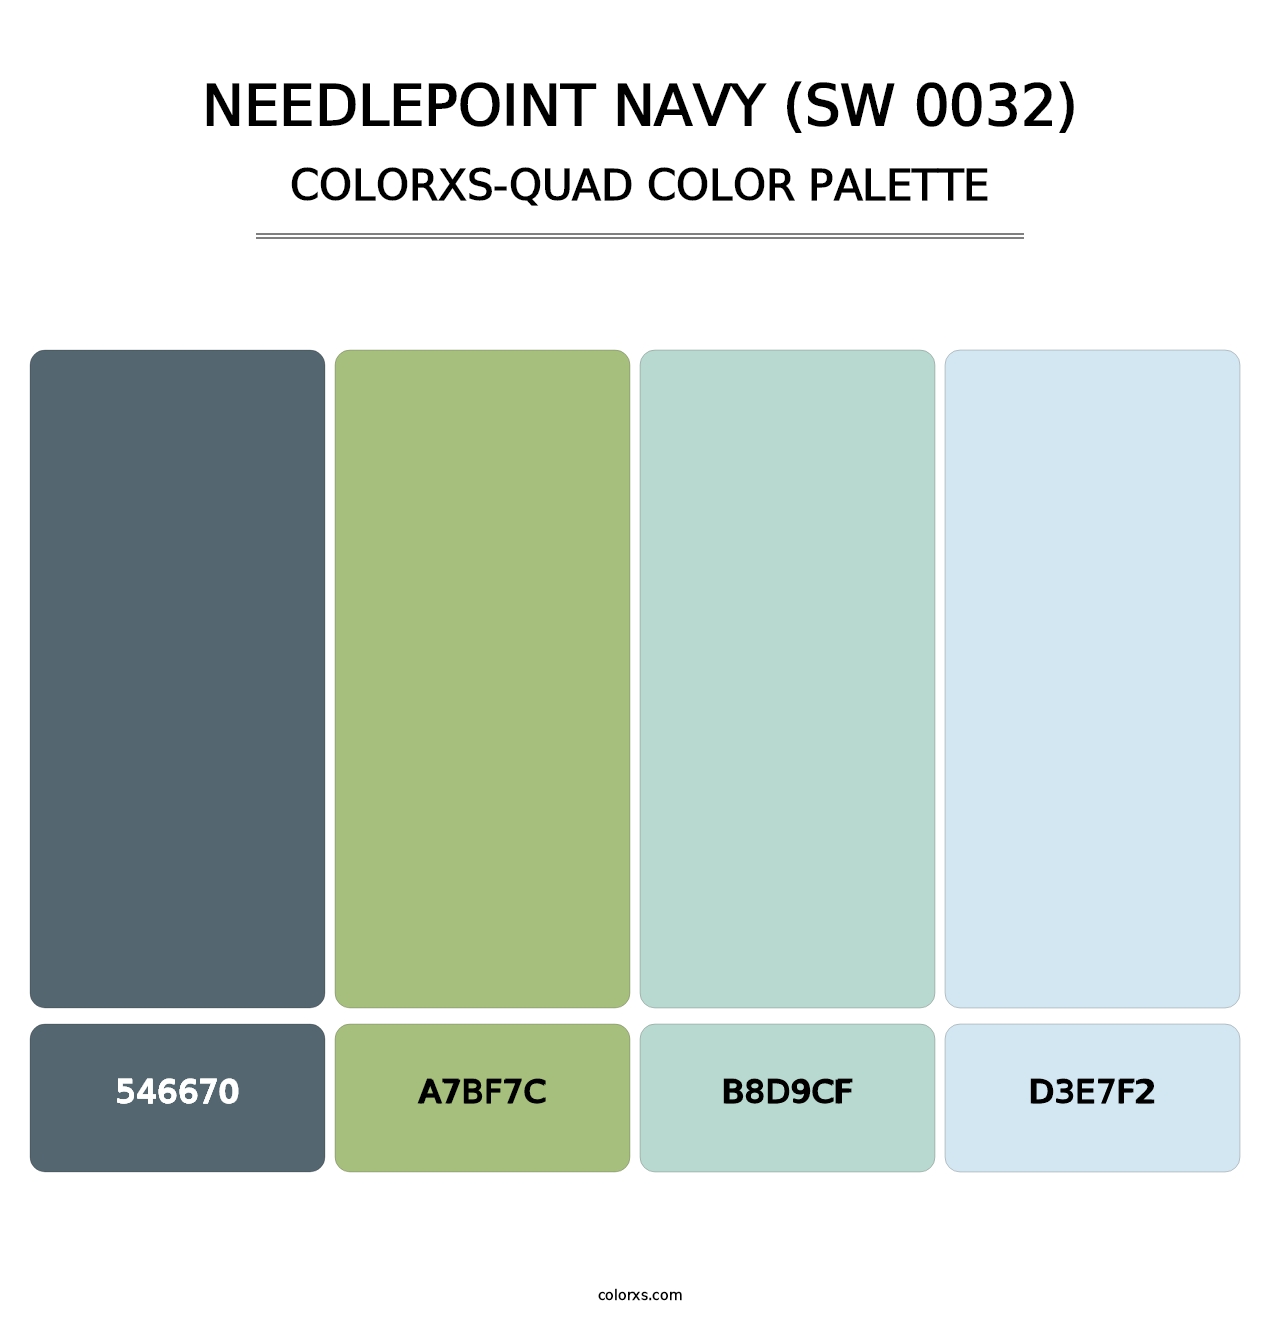 Needlepoint Navy (SW 0032) - Colorxs Quad Palette